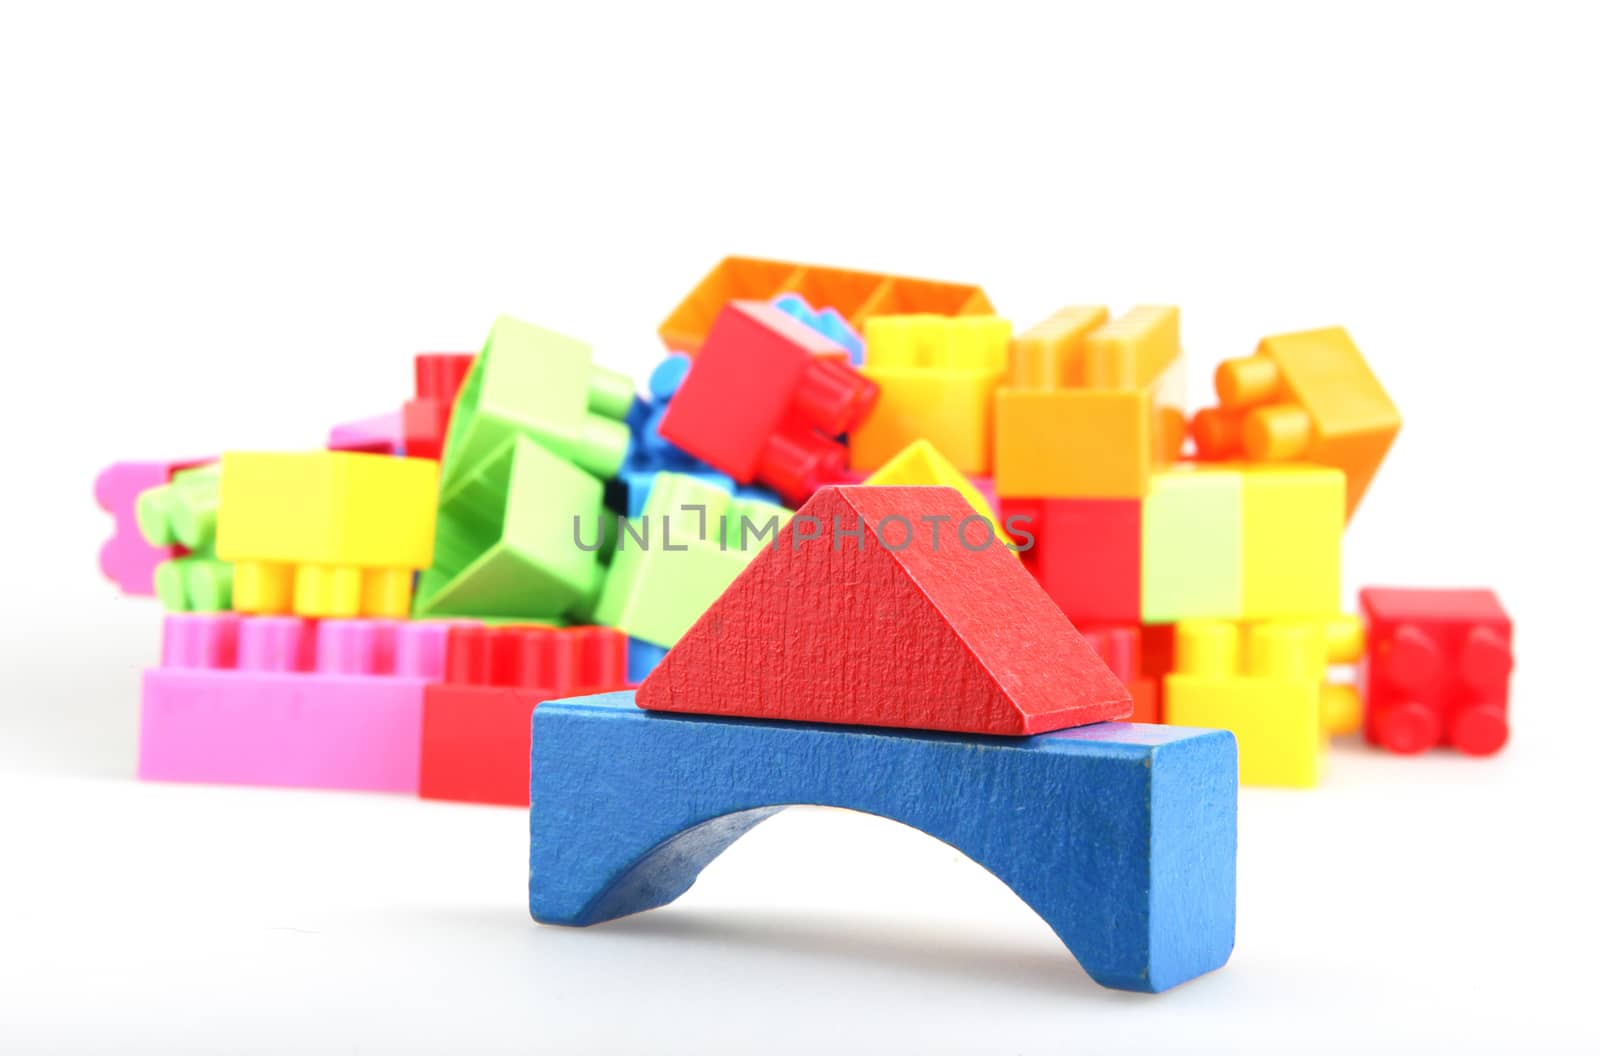 Plastic Toy Blocks Encourage Learning Through Play